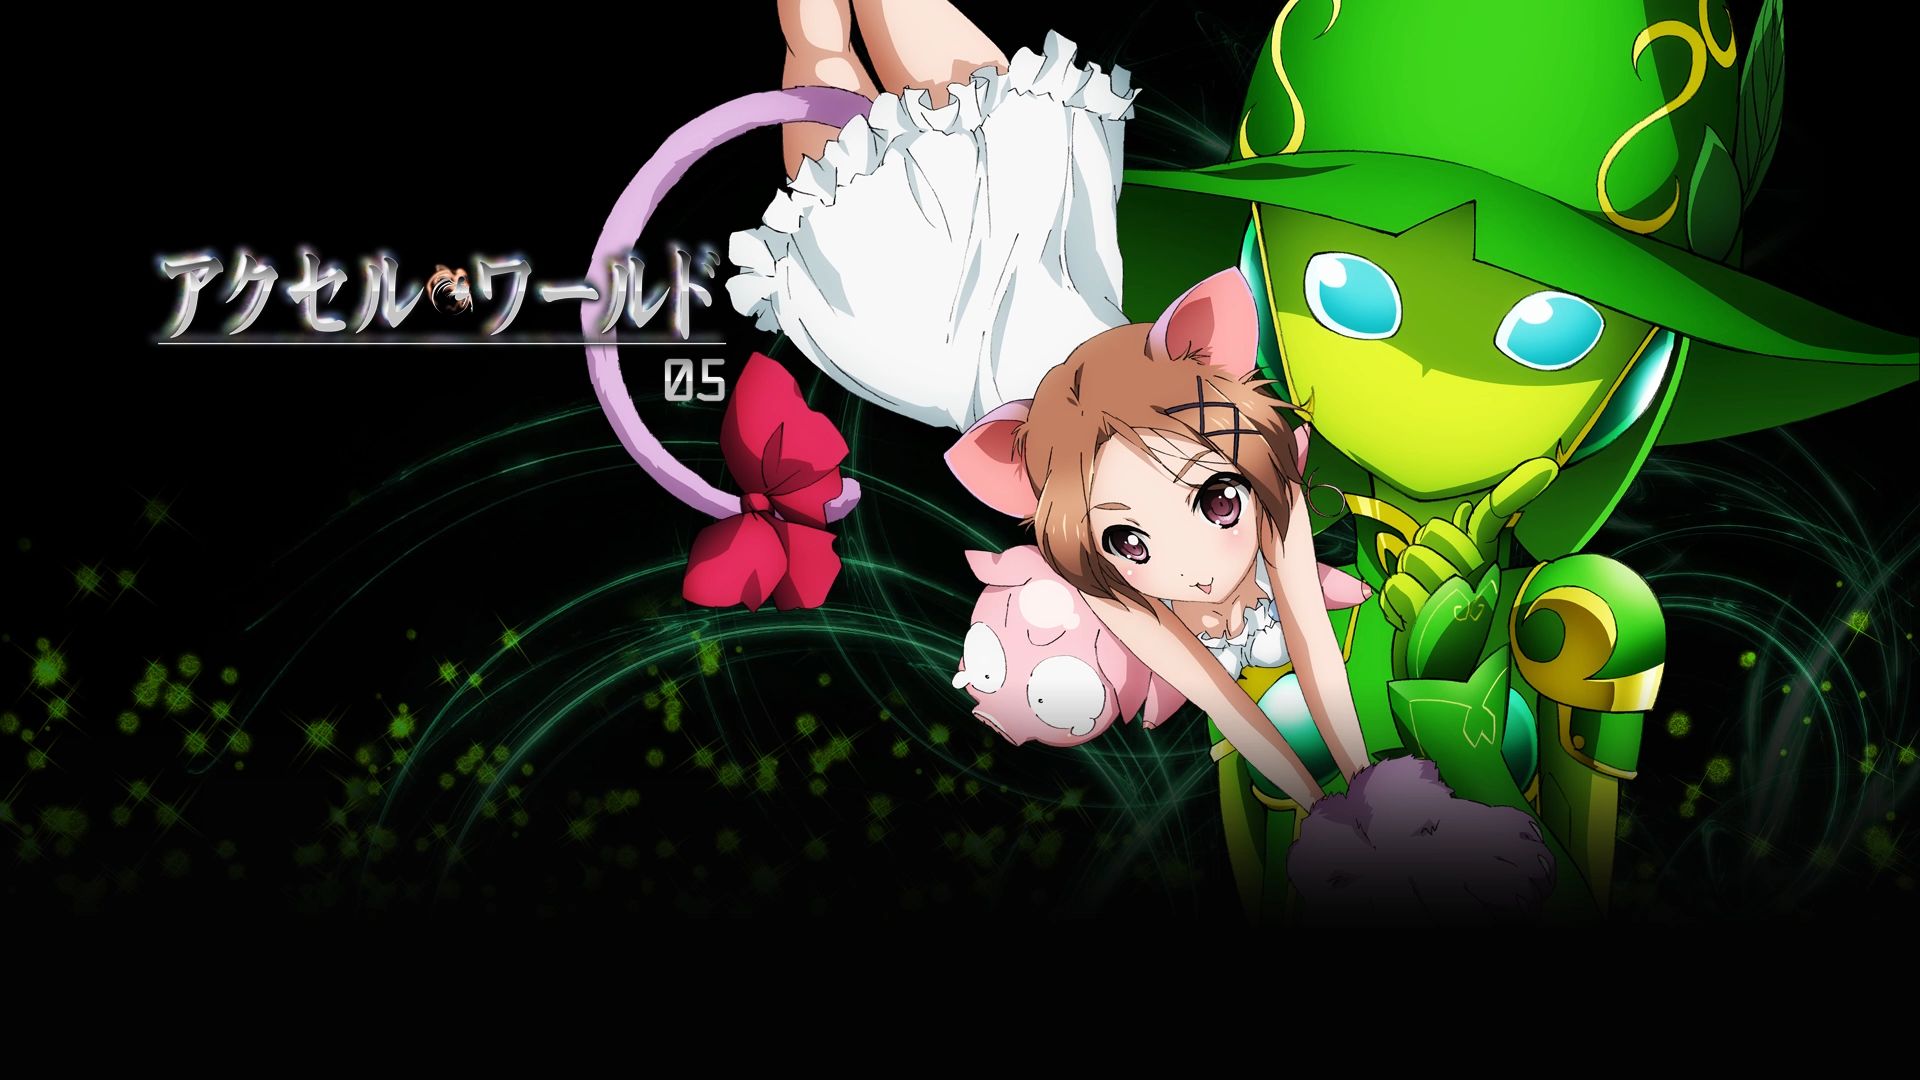 751217 descargar imagen animado, accel world, chiyuri kurashima: fondos de pantalla y protectores de pantalla gratis